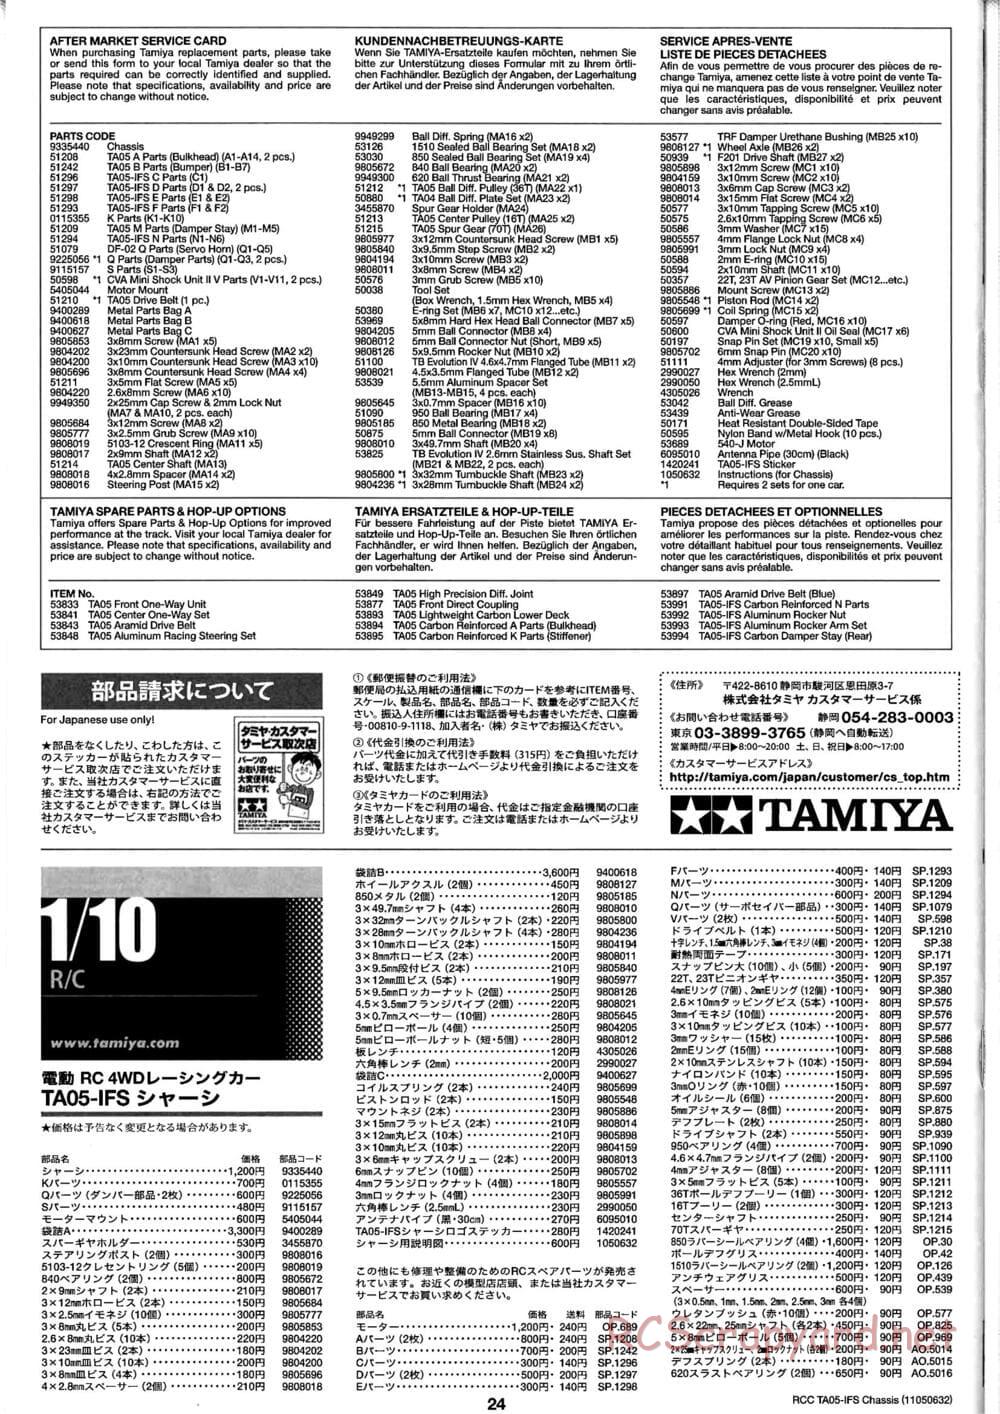 Tamiya - TA05-IFS Chassis - Manual - Page 24